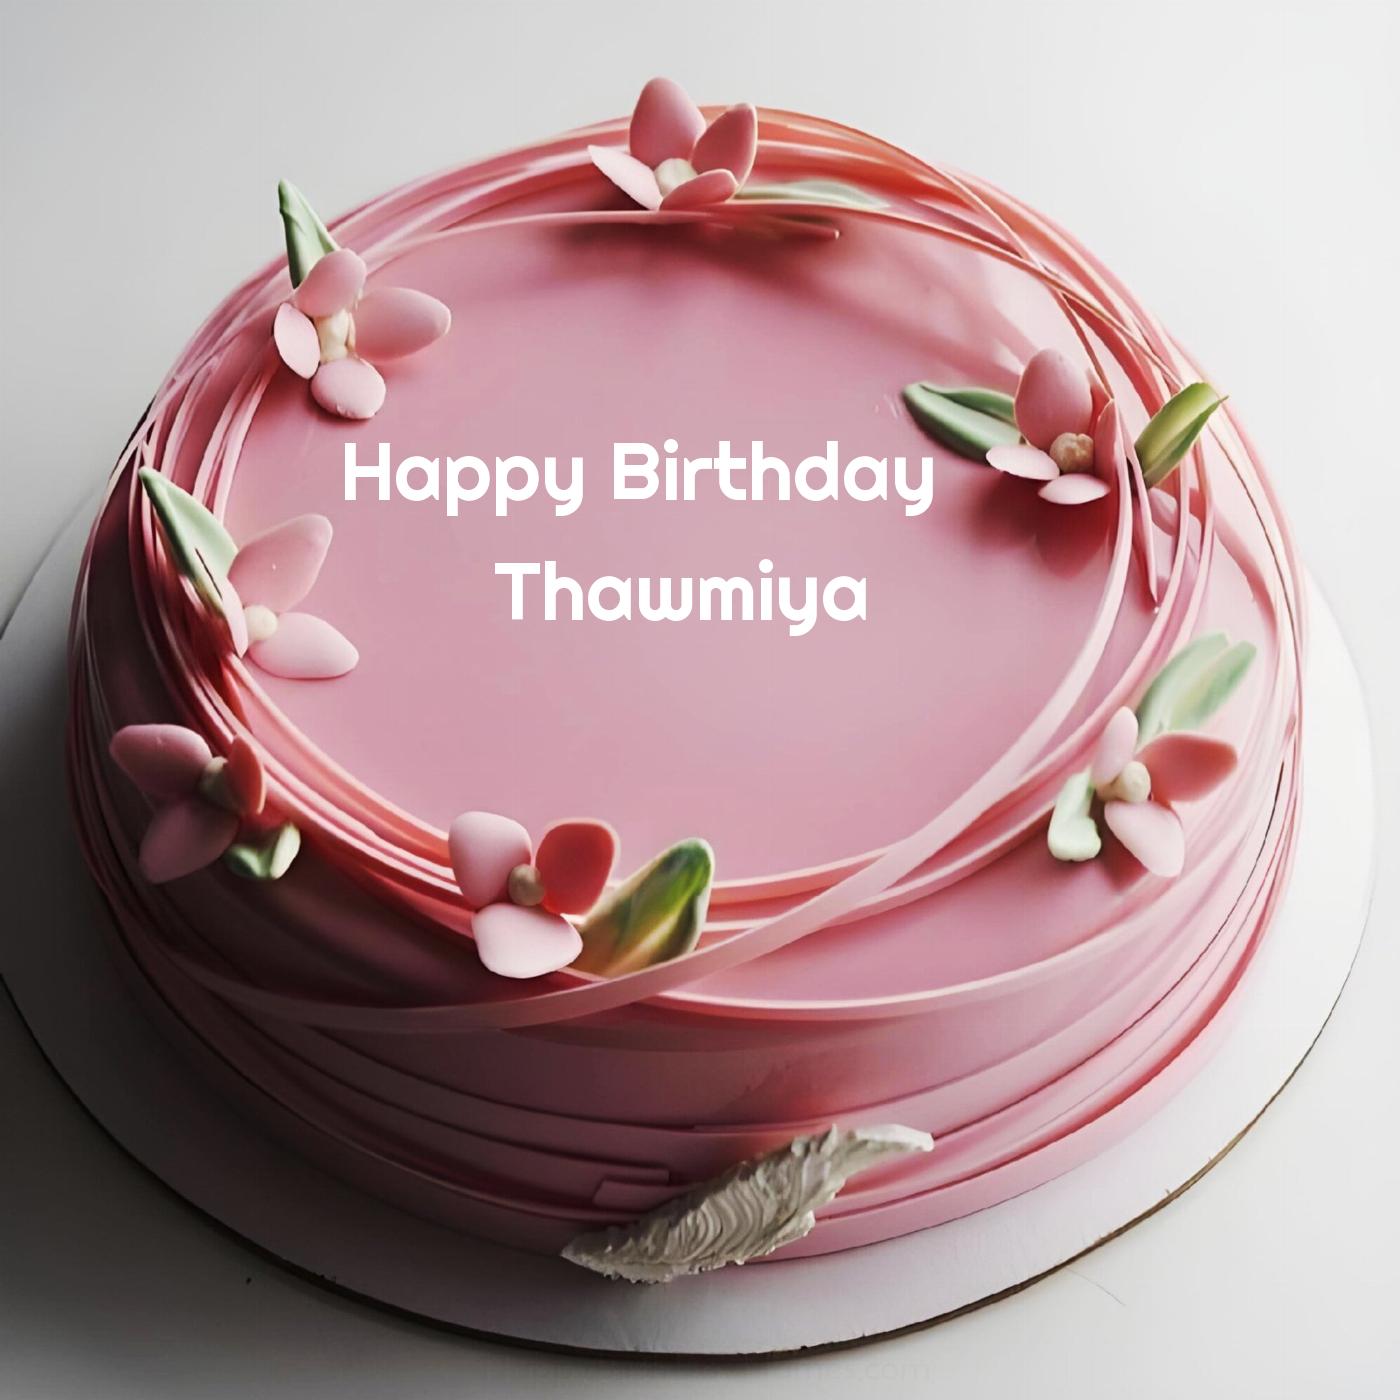 Happy Birthday Thawmiya Pink Flowers Cake